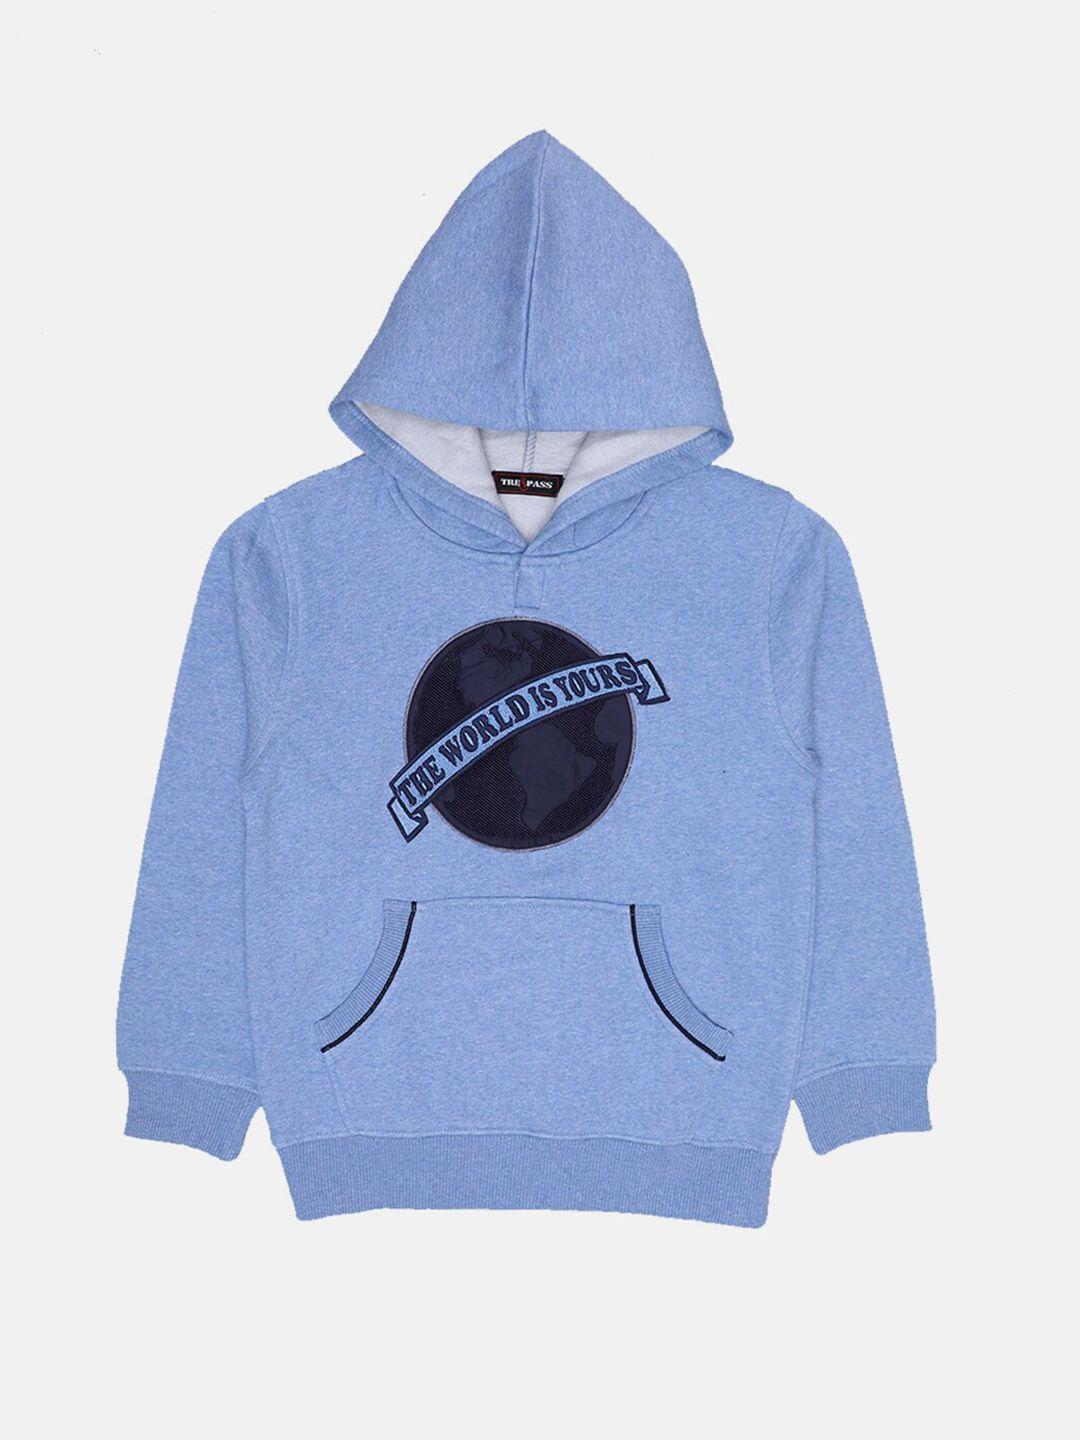 tre&pass-boys-blue-printed-hooded-sweatshirt